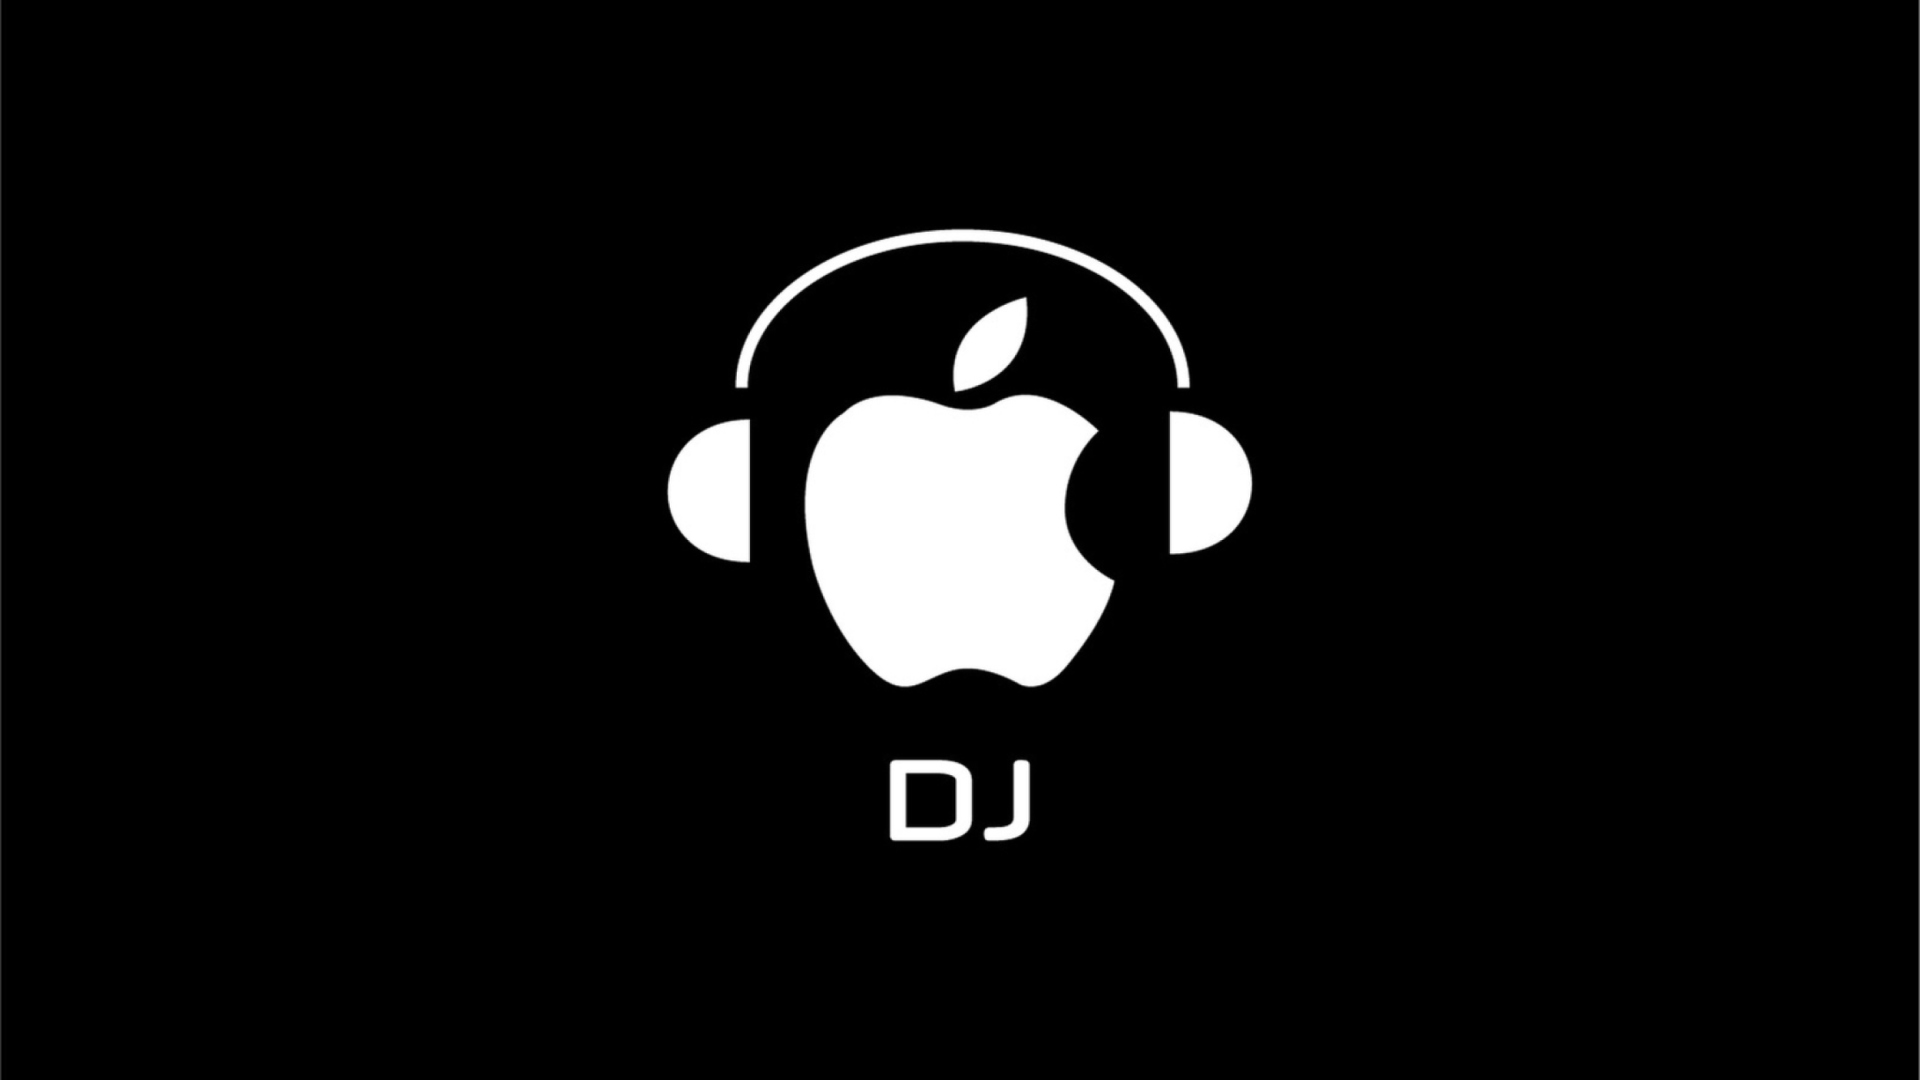 Das Apple DJ Wallpaper 1920x1080